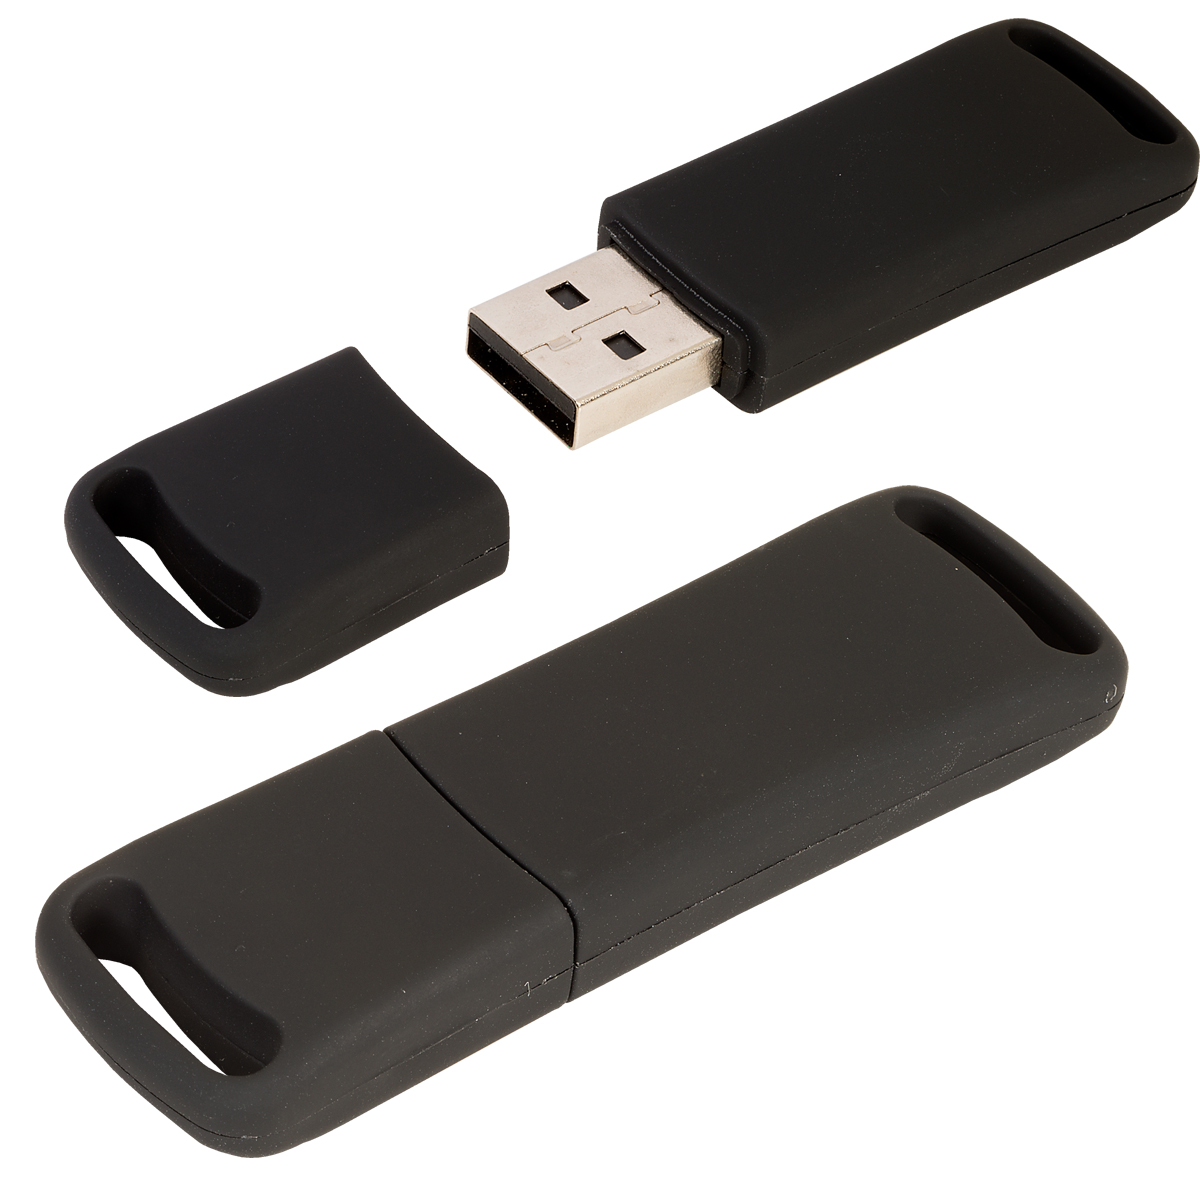 Rubberized USB Memory Flash Drive - 1GB